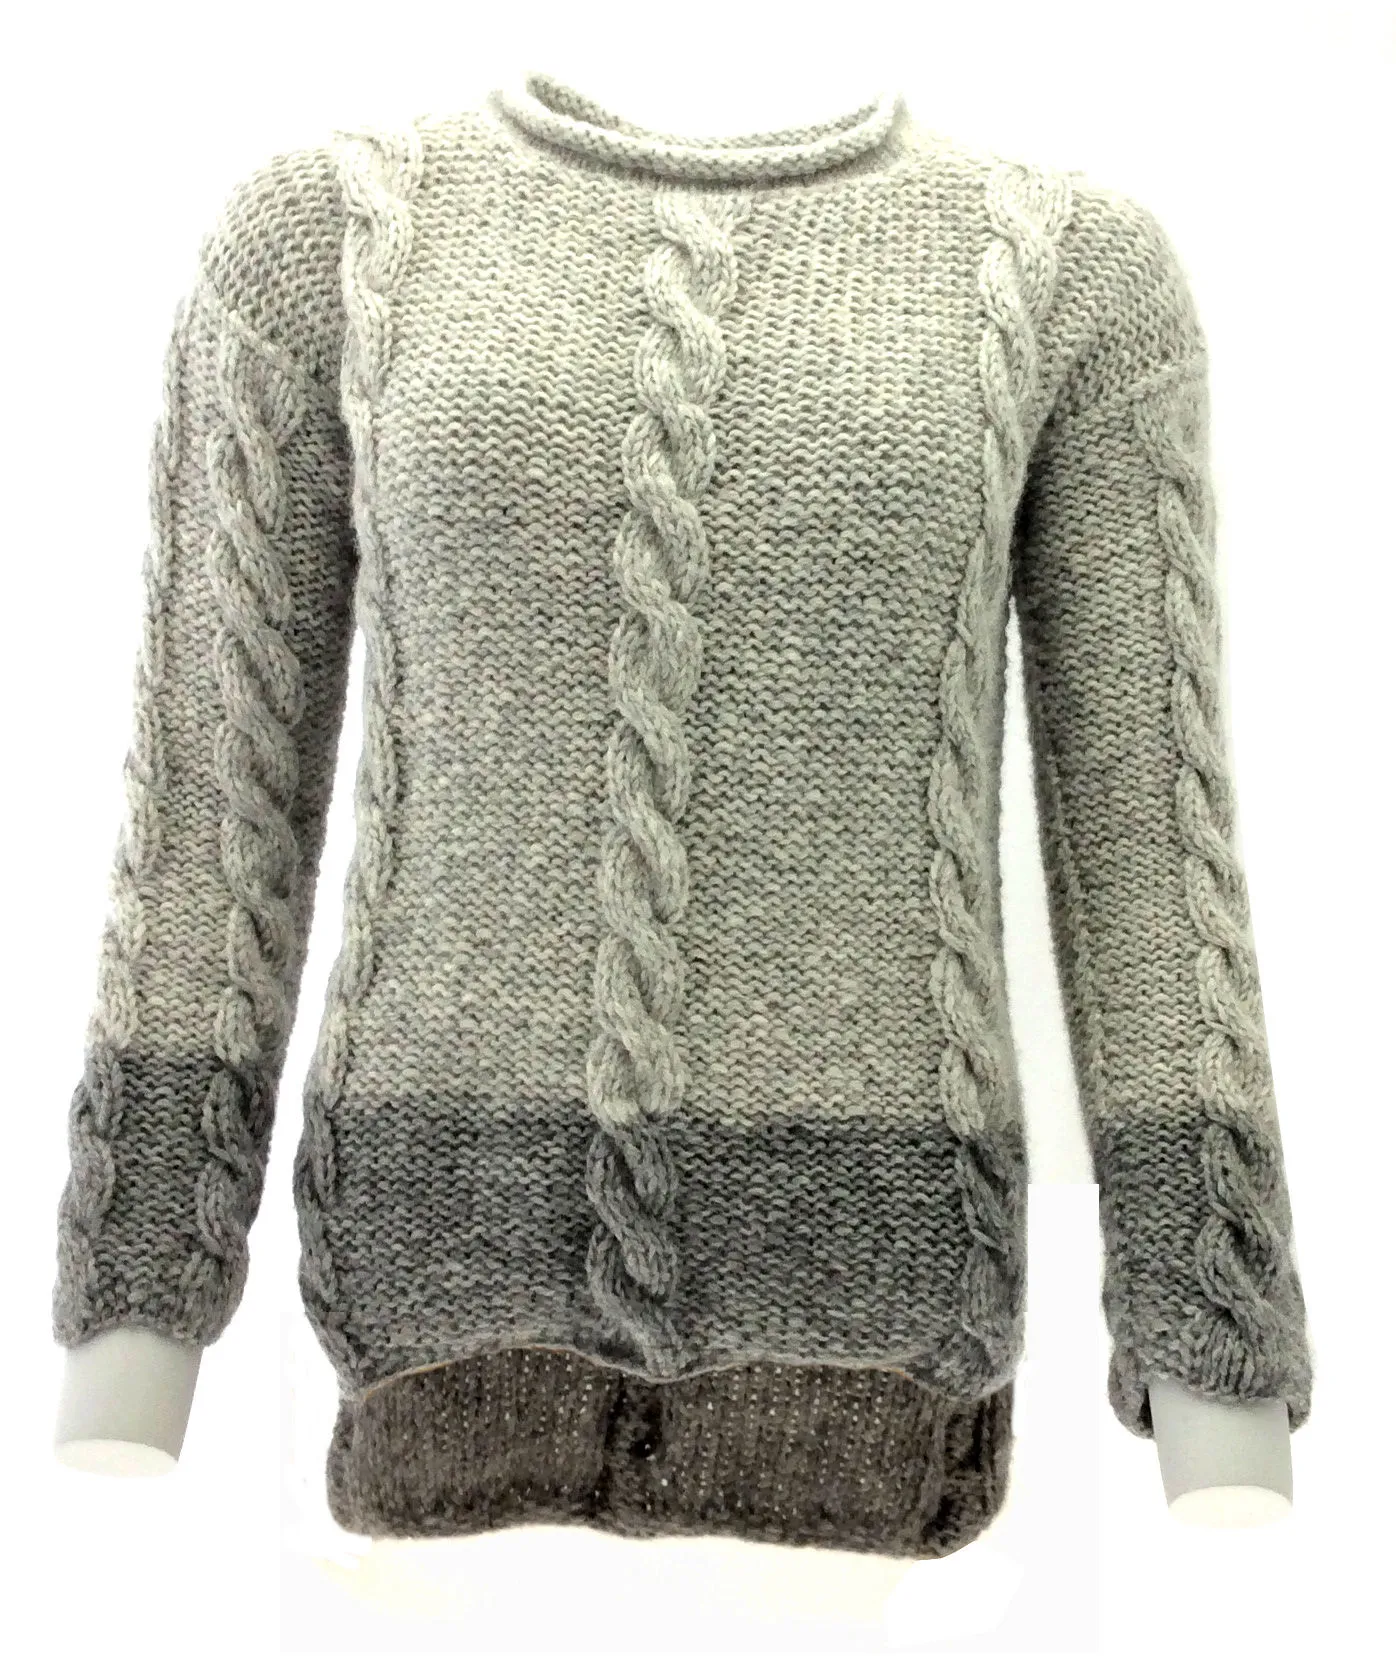 Sweater med enkelte snoninger, opskrift fra Garn